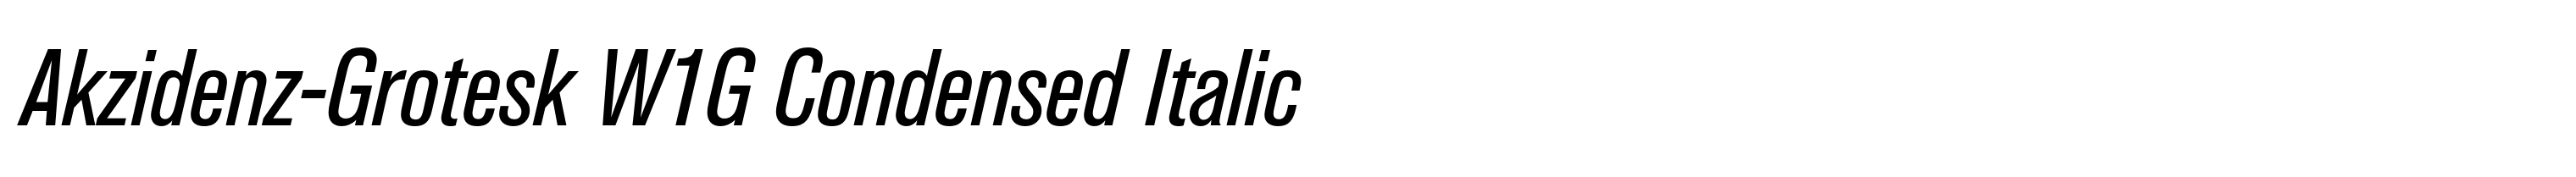 Akzidenz-Grotesk W1G Condensed Italic